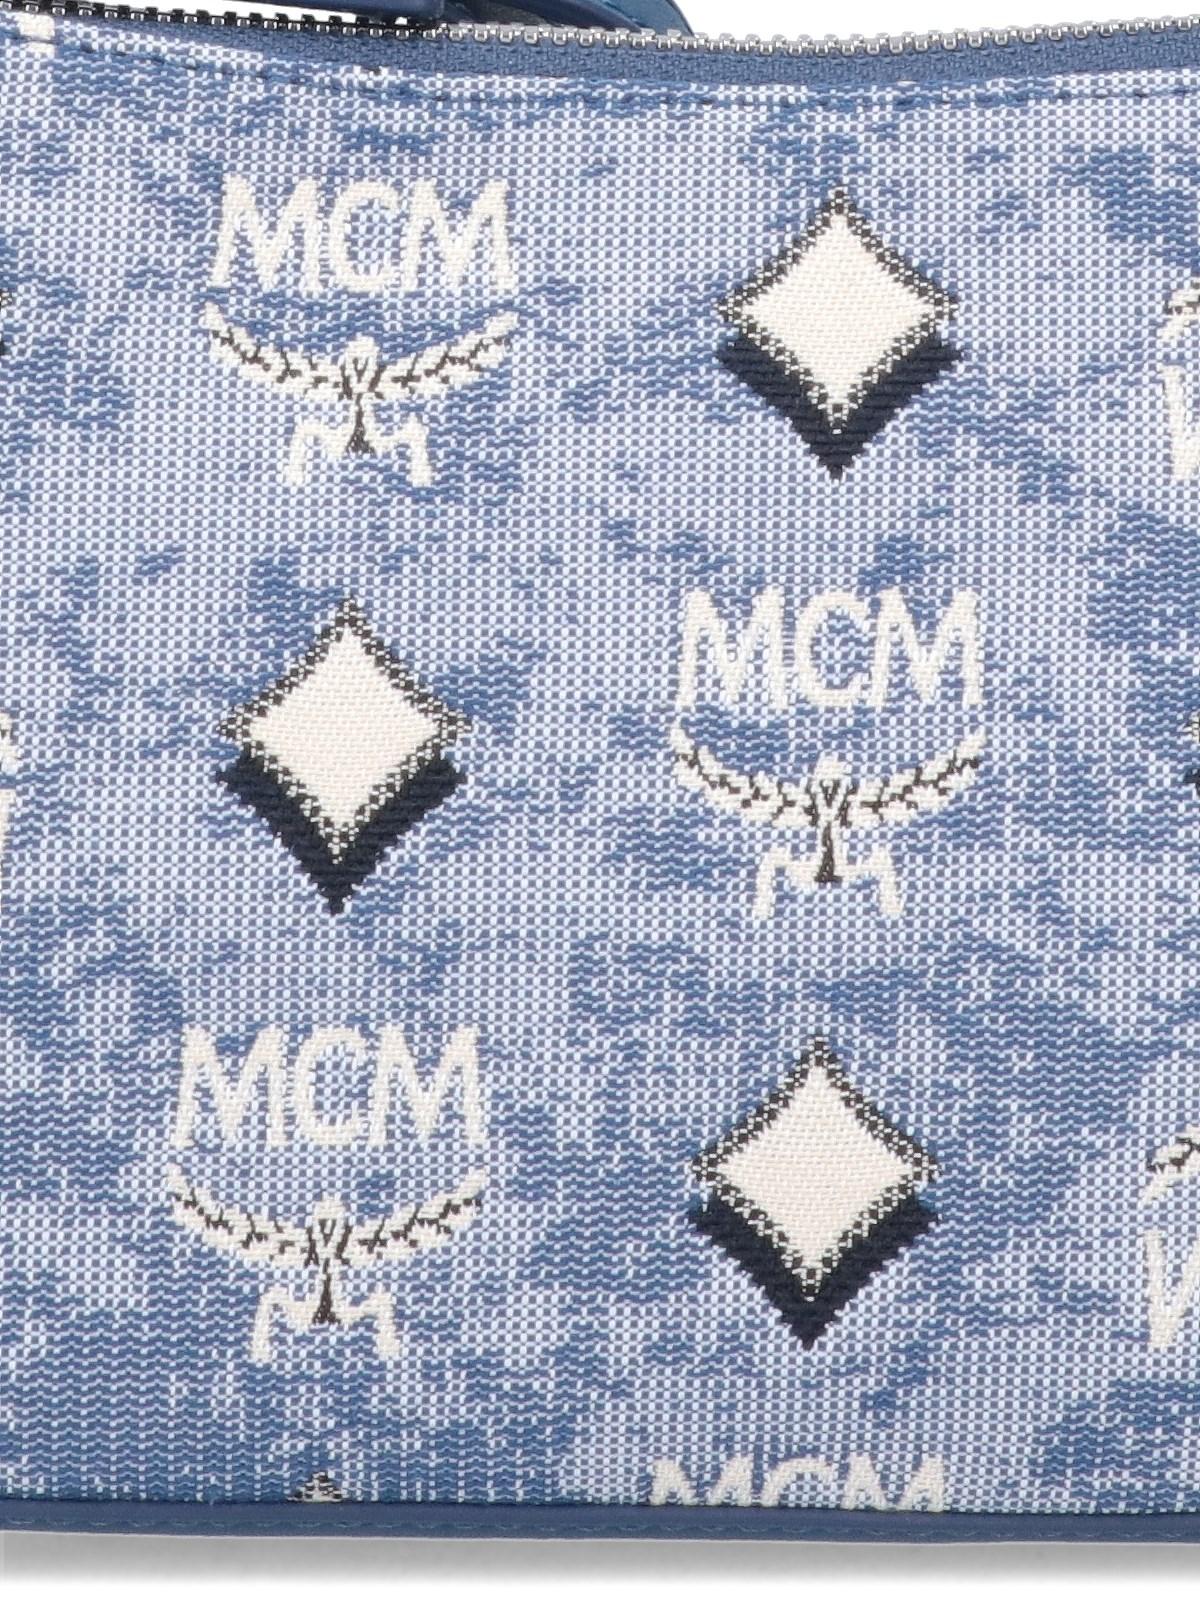 MCM, Bags, New Mini Vintage Jacquard Shoulder Bag Mcm Jean